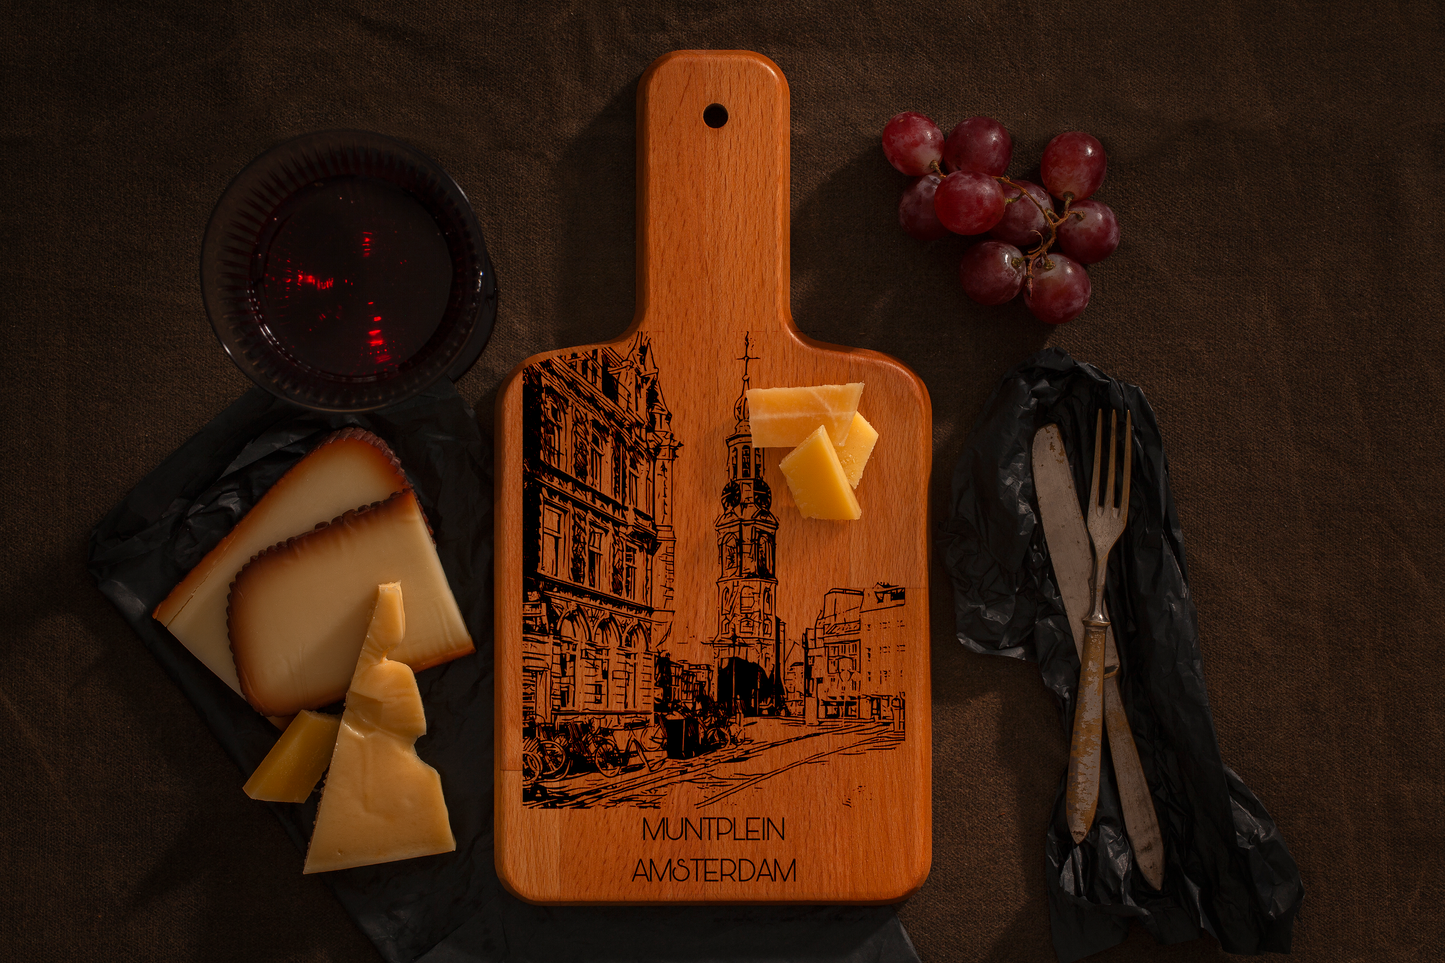 Amsterdam, Muntplein, cheese board, on countertop